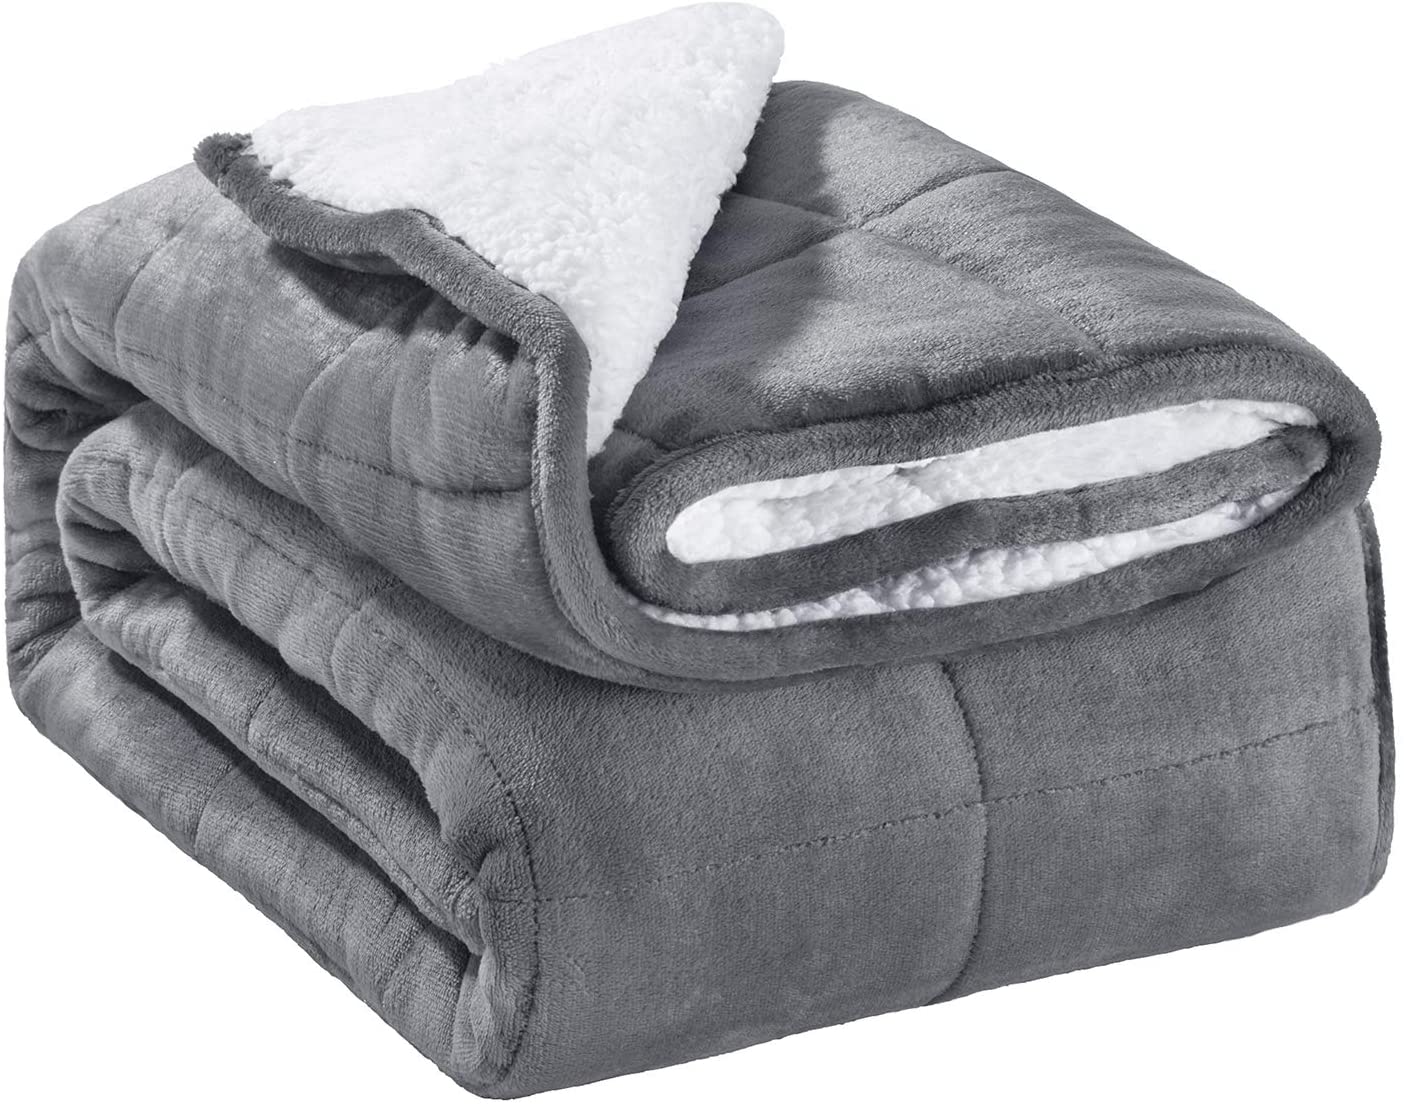 sivio sherpa fleece blanket